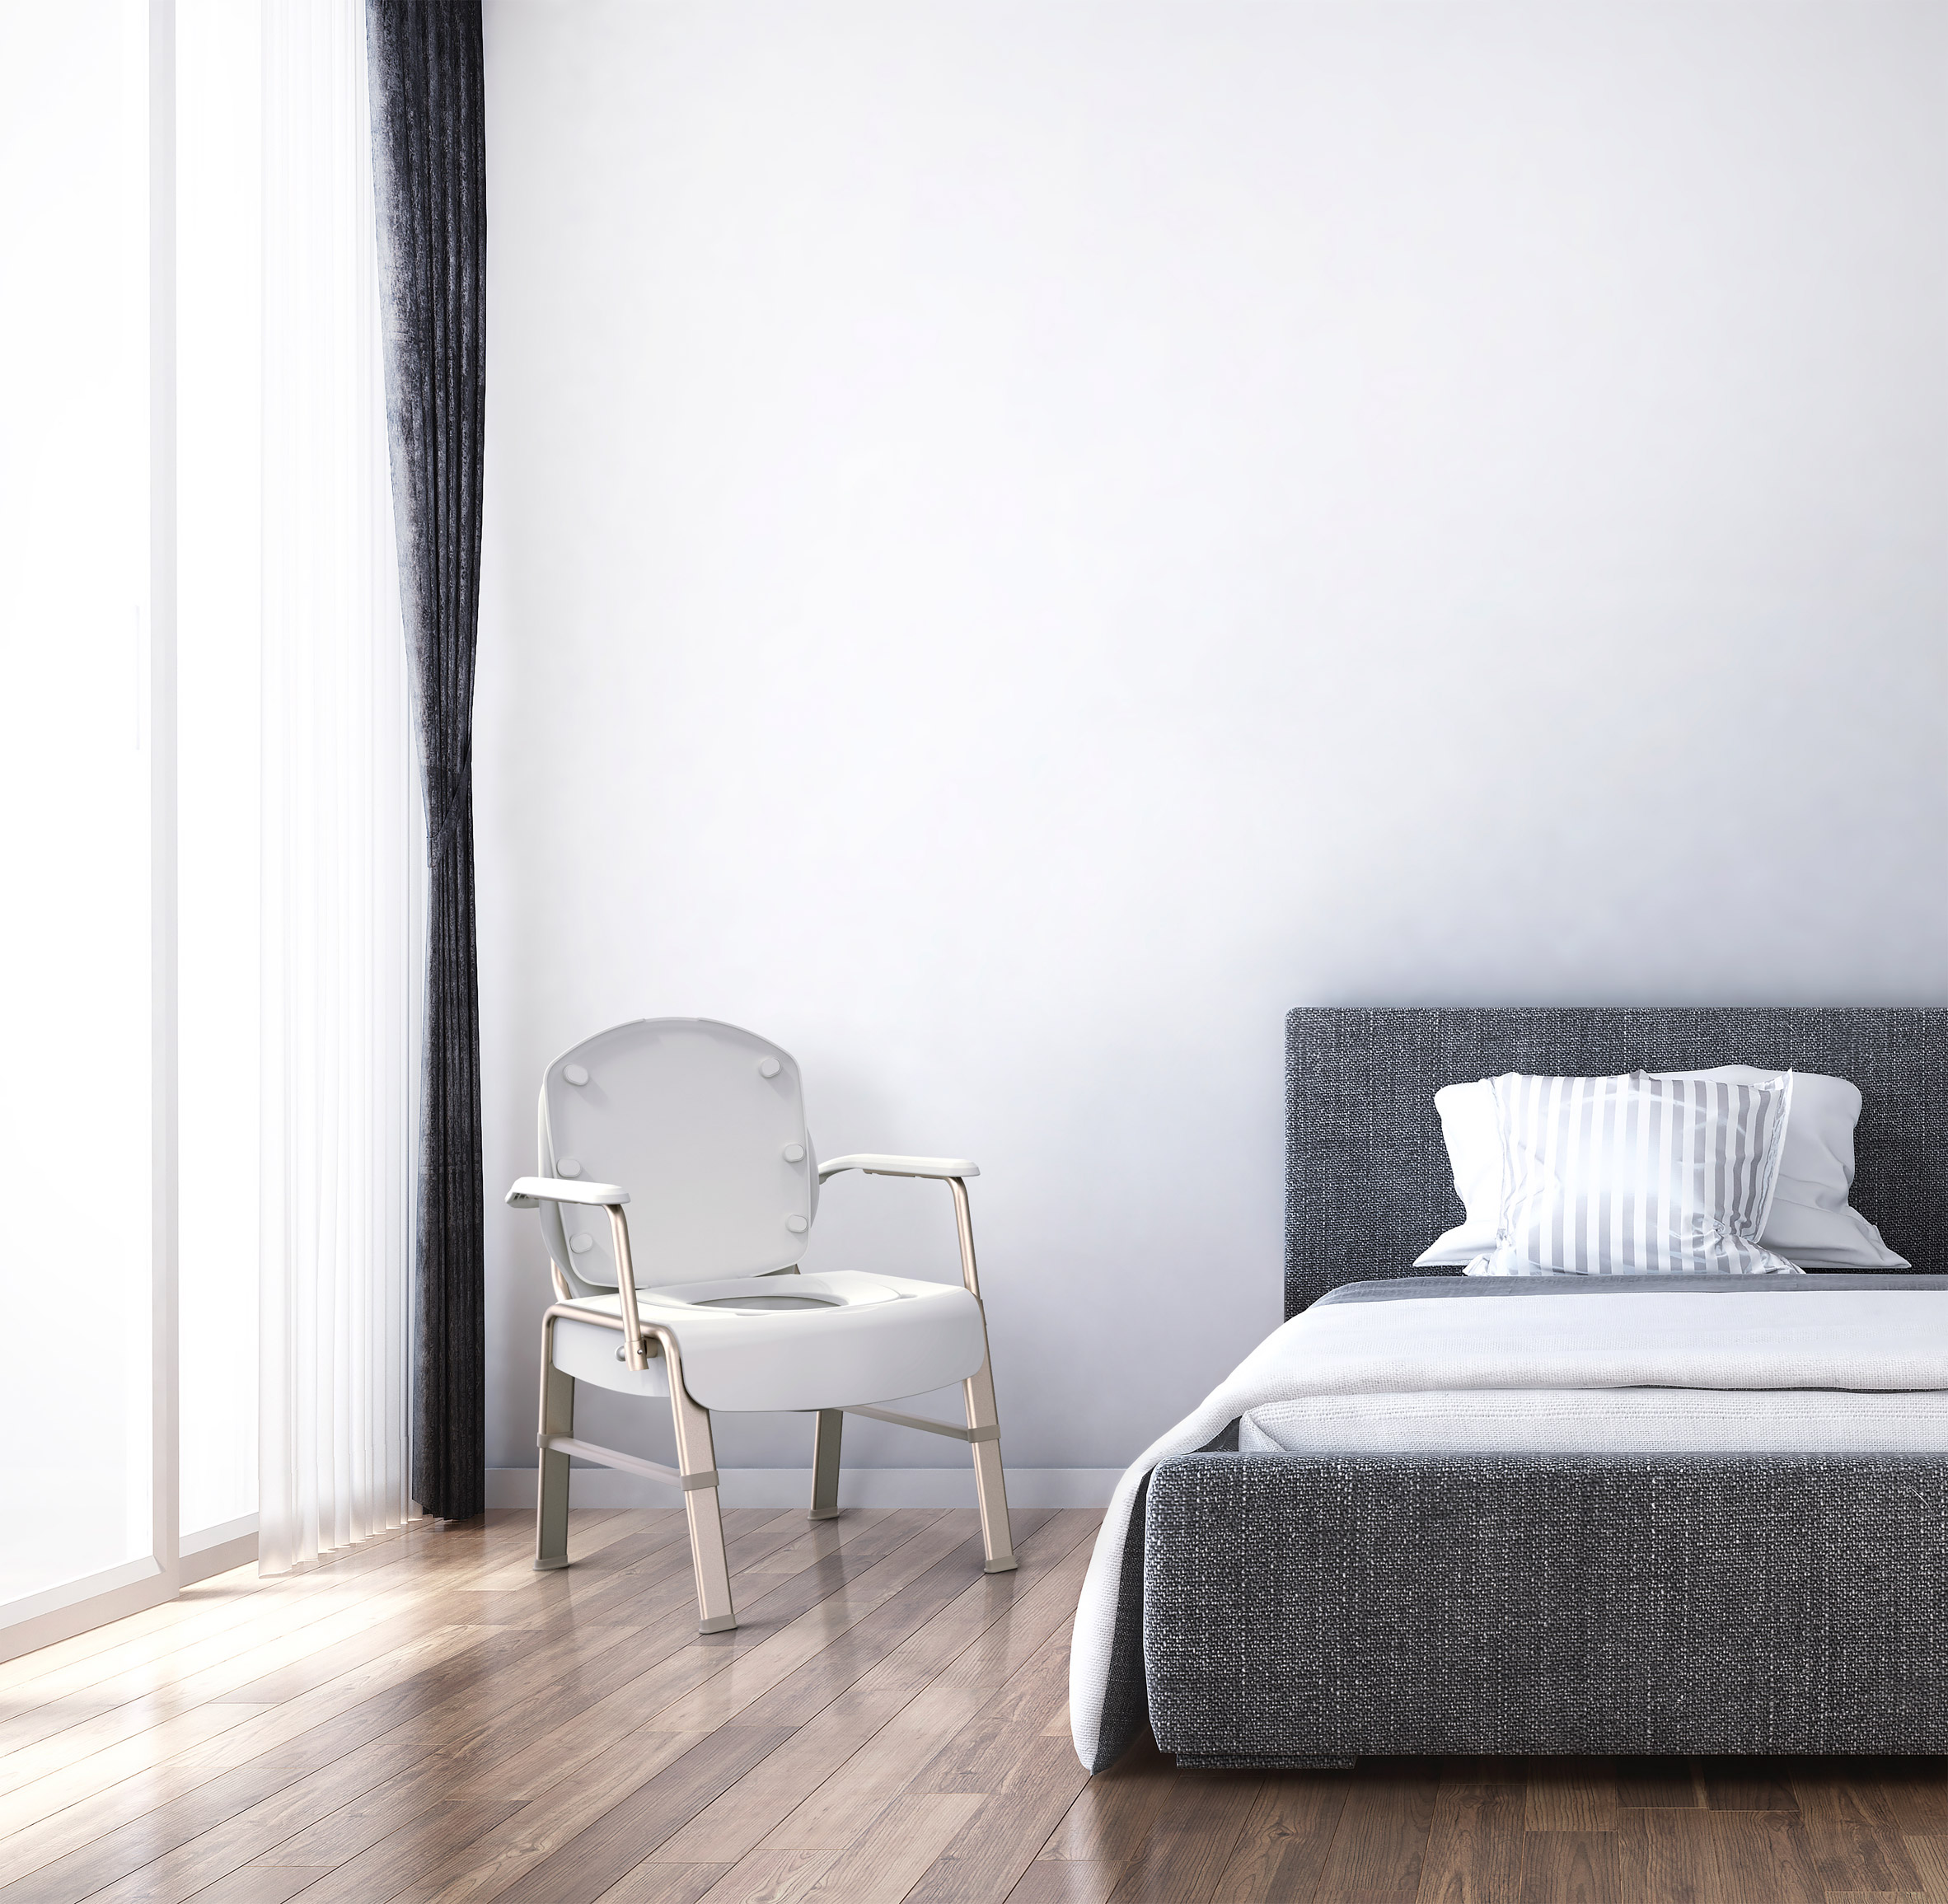 Louis Vuitton Bed Linen - Joy Furniture